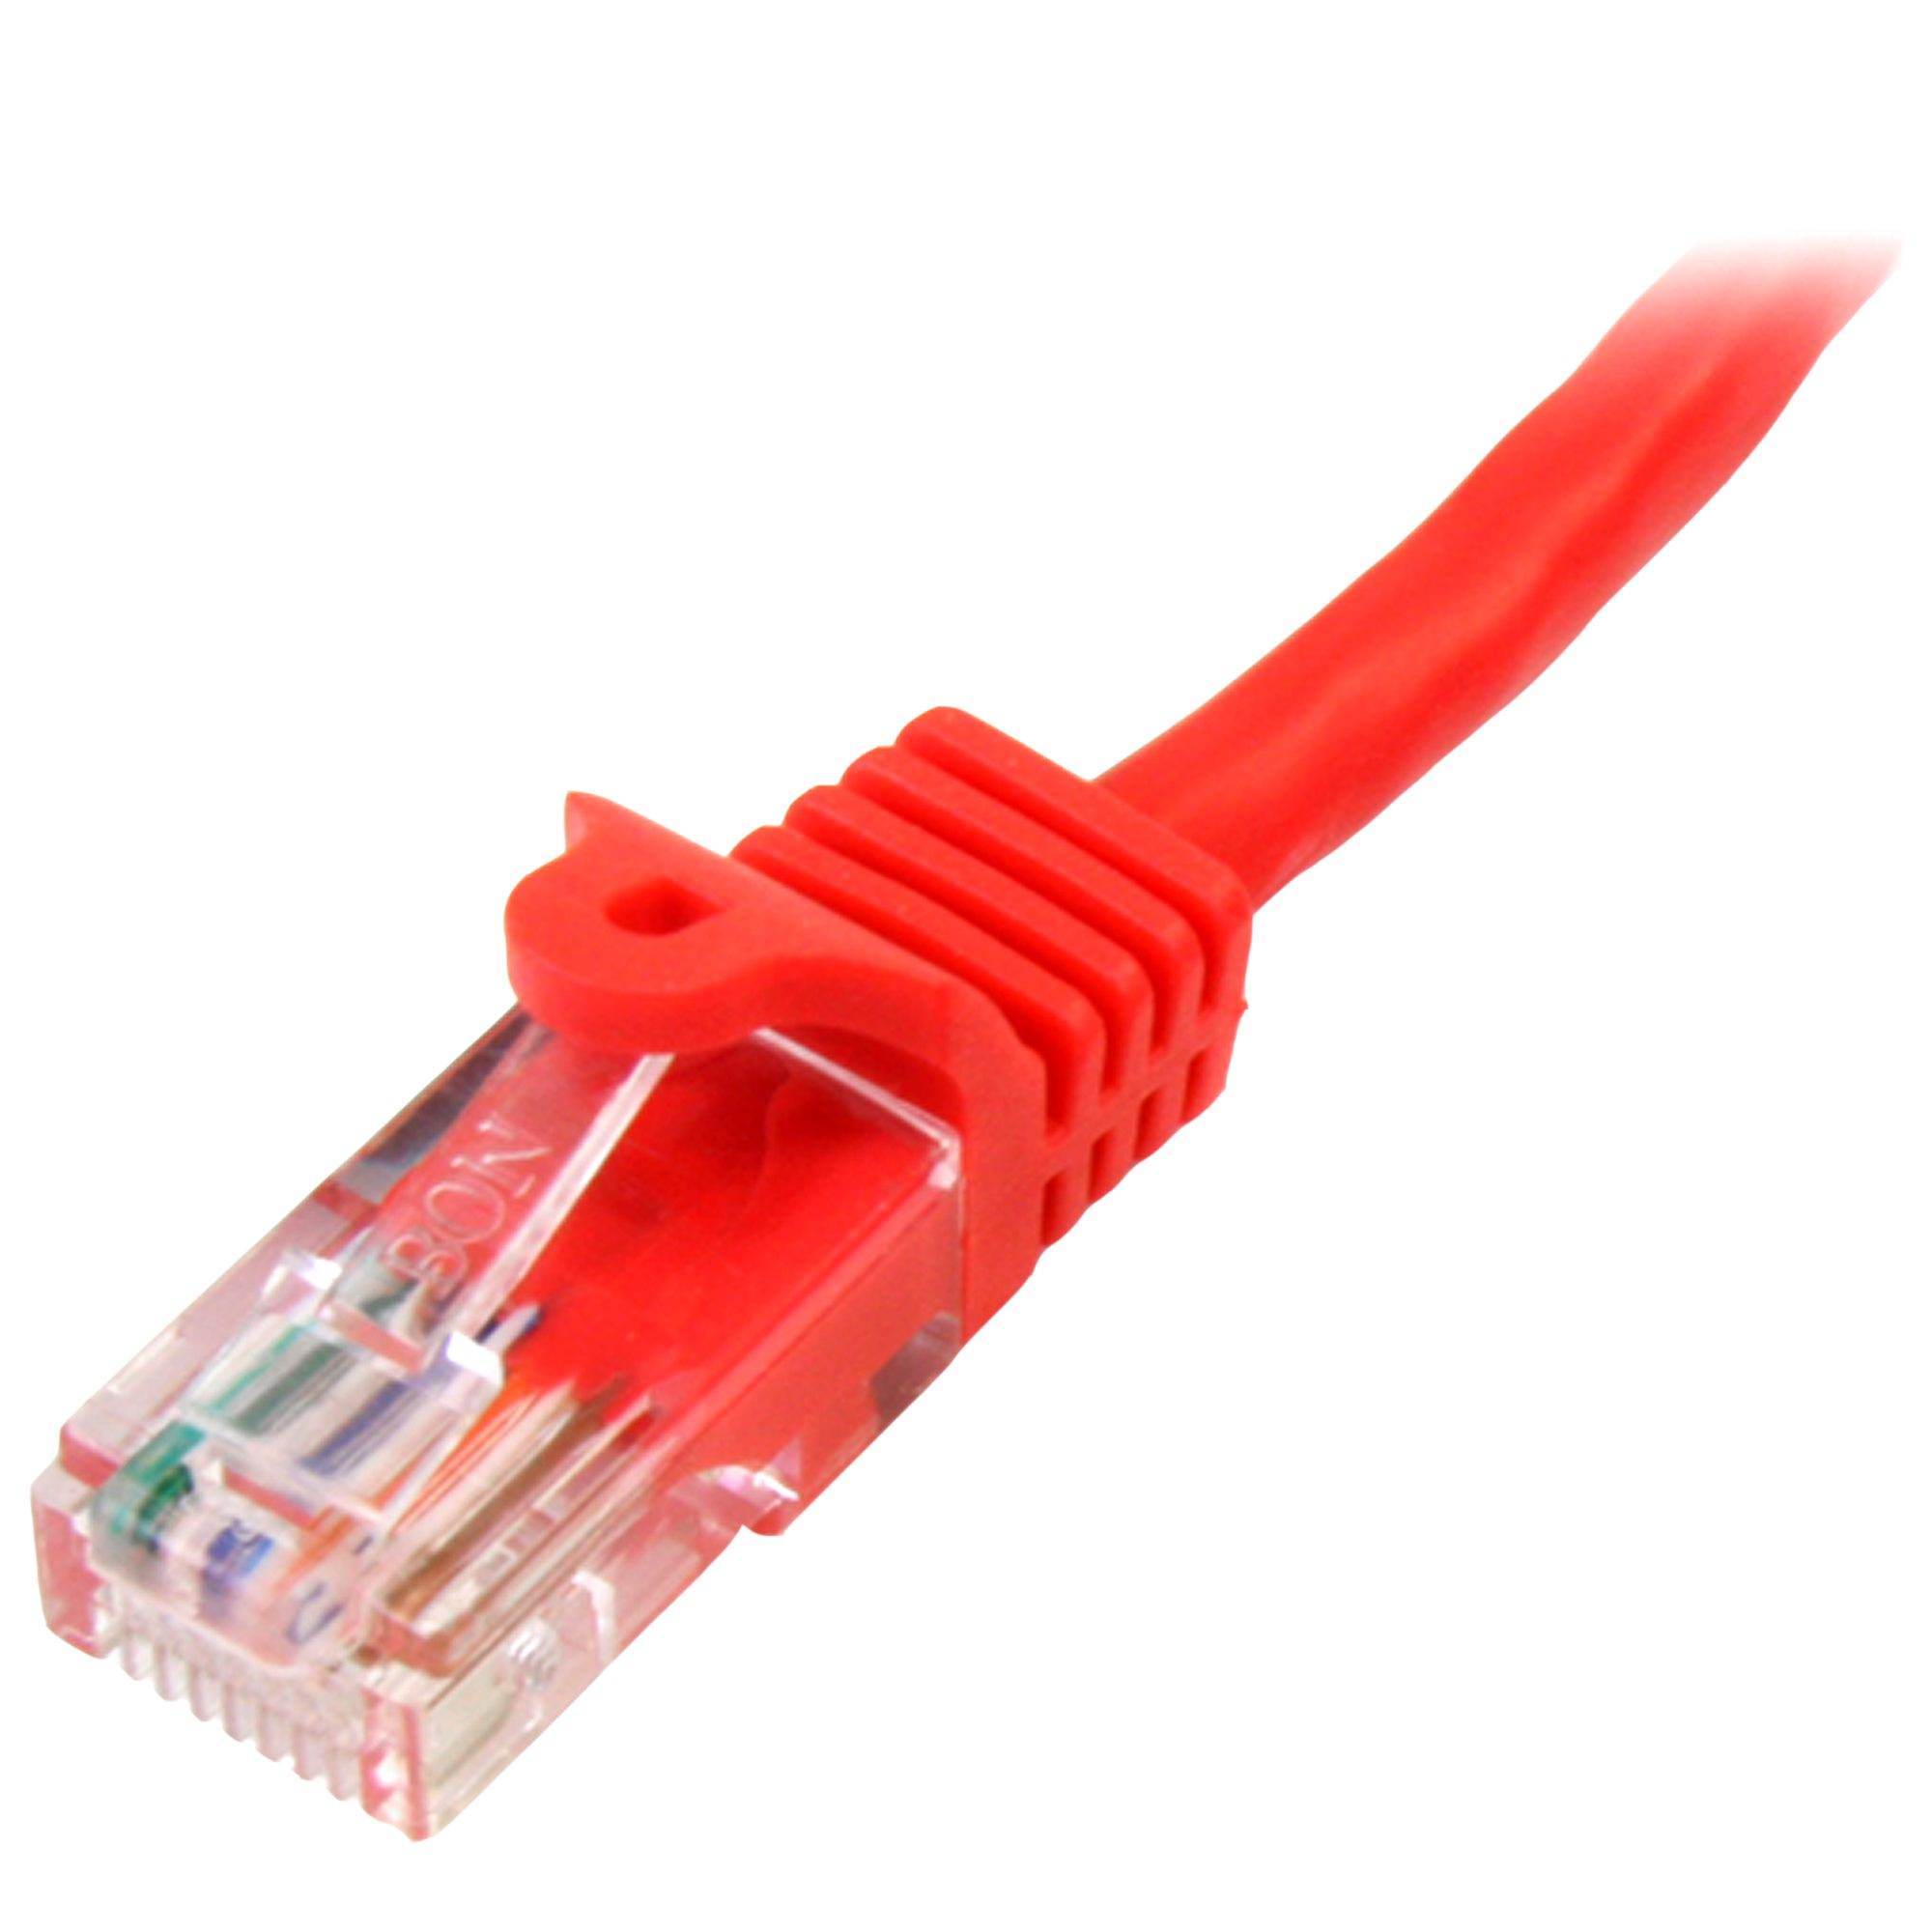 StarTech.com 0,5m Cat5e Ethernet Netzwerkkabel Snagless mit RJ45 - Cat 5e UTP Kabel - Rot - Patch-Kabel - RJ-45 (M)